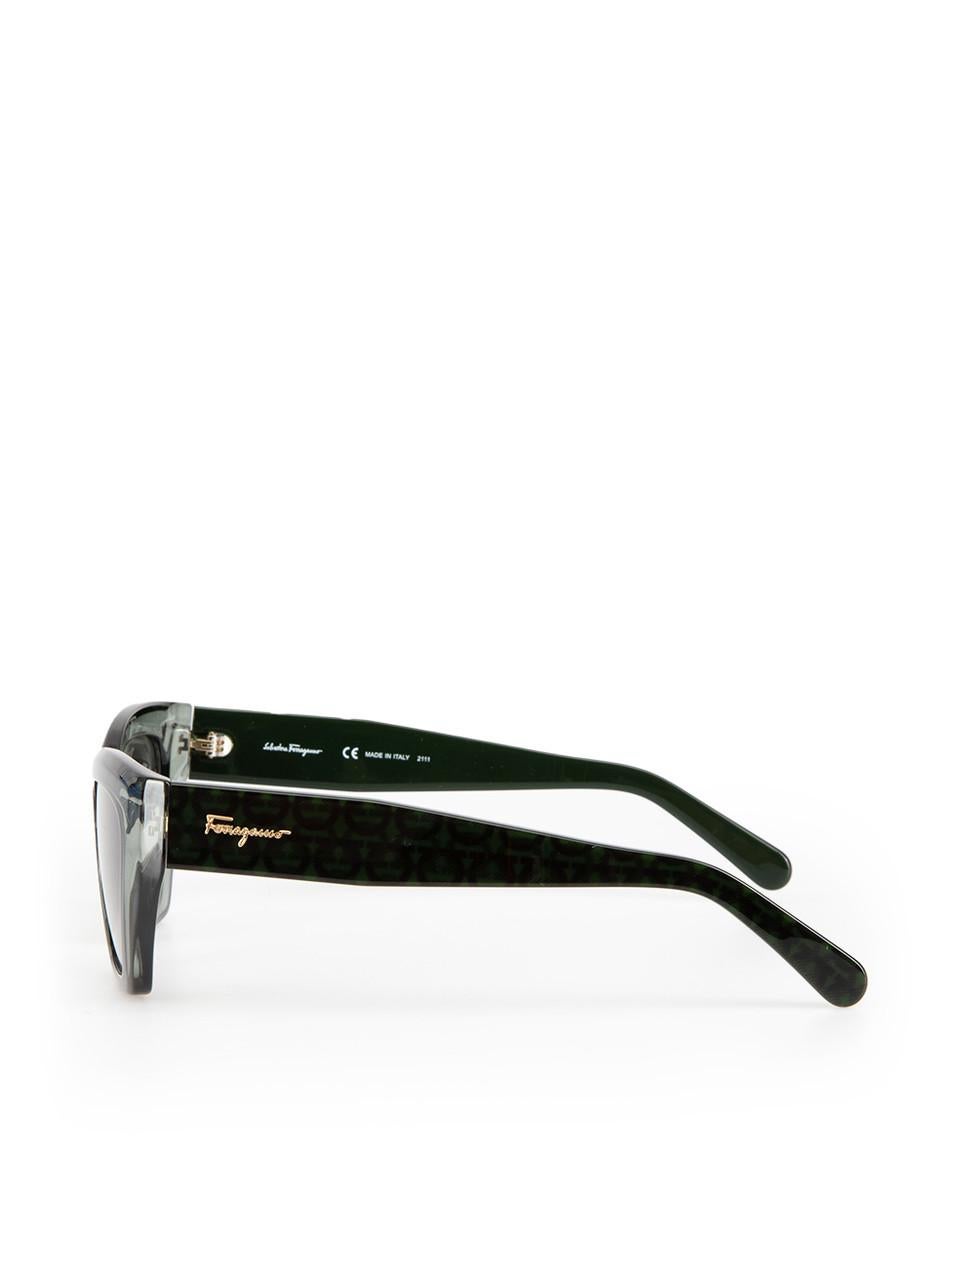 Salvatore Ferragamo Forest Green Transparent Sunglasses For Sale 1